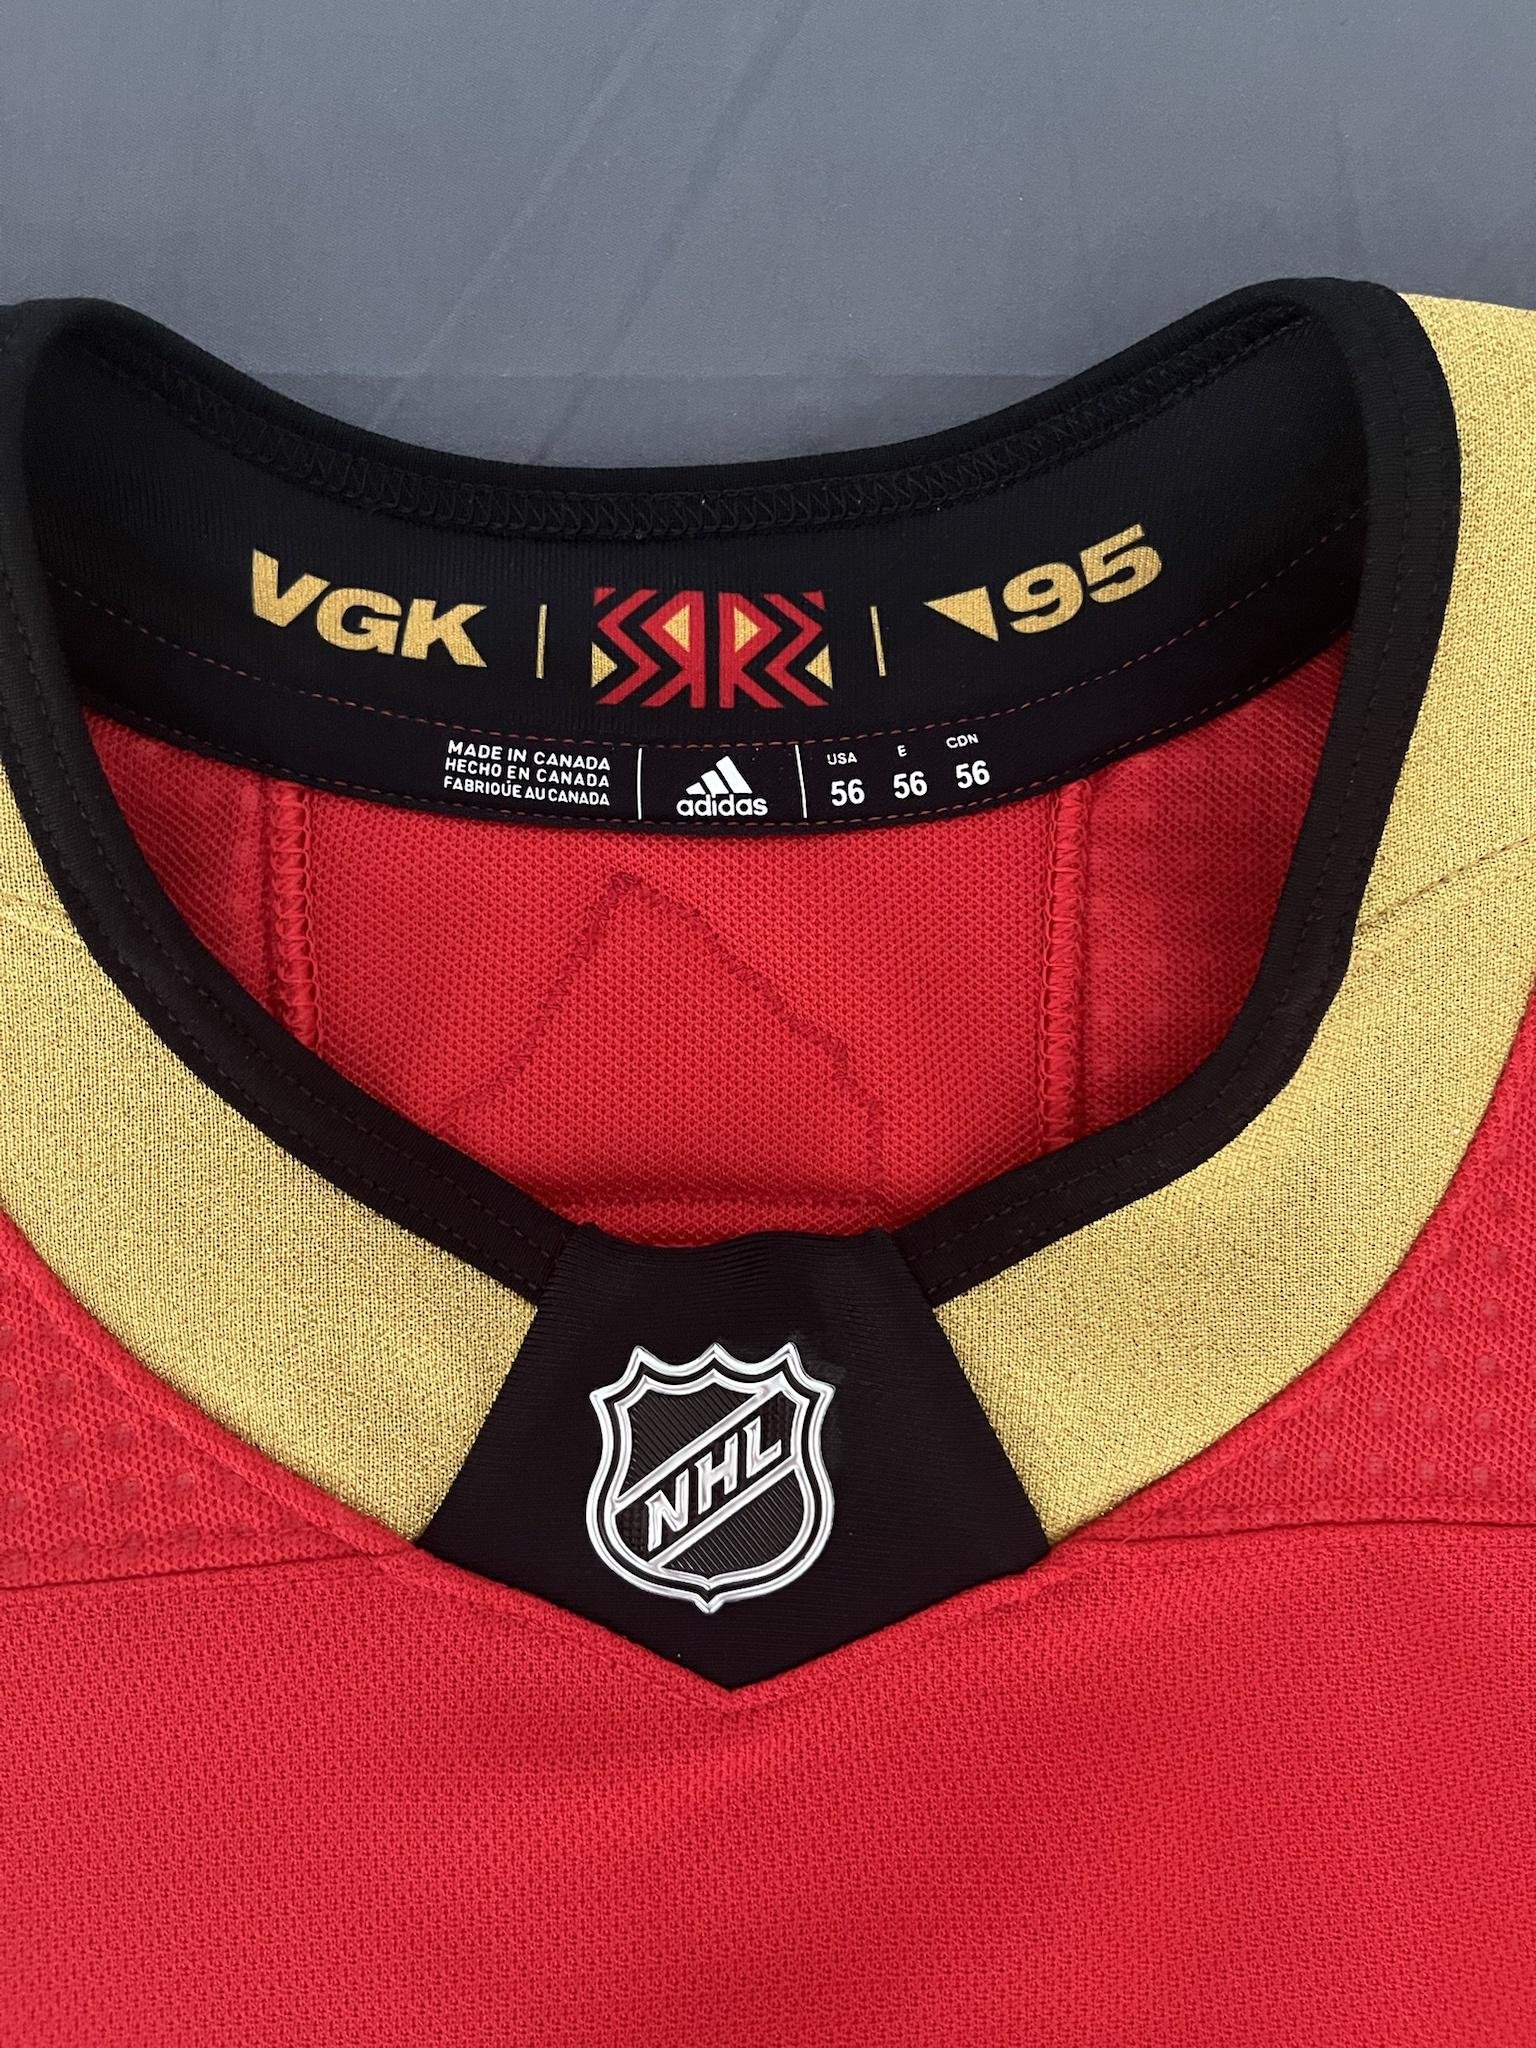 ADIDAS NHL LAS VEGAS Golden Knights - Away Jersey W/Strap Size 46 Ryan  Reaves